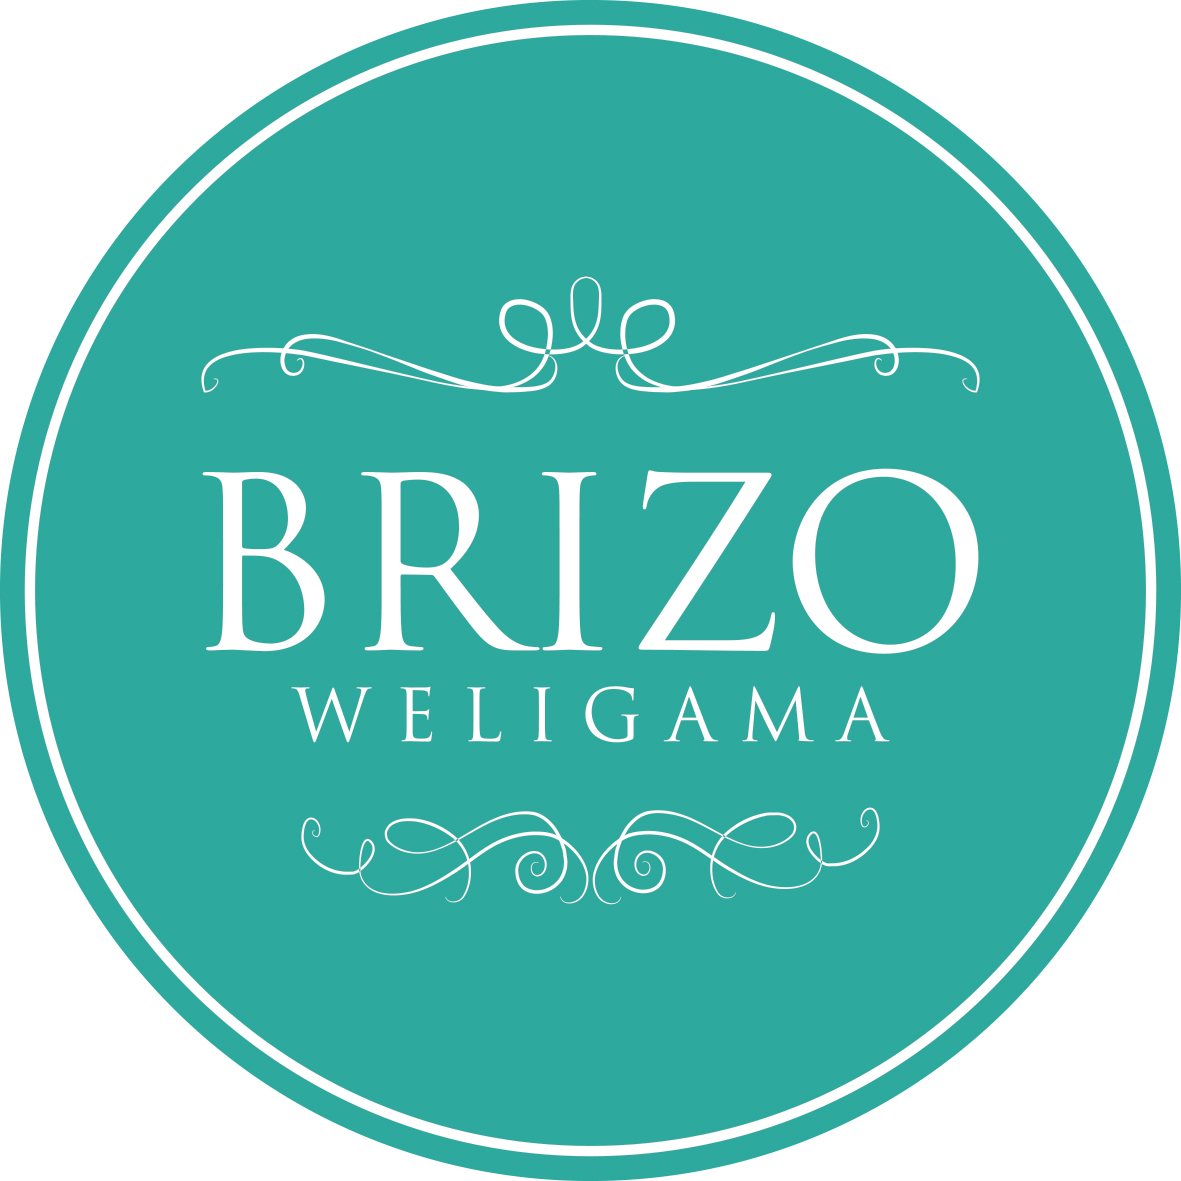 Brizo Mirissa, Brizo Weligama